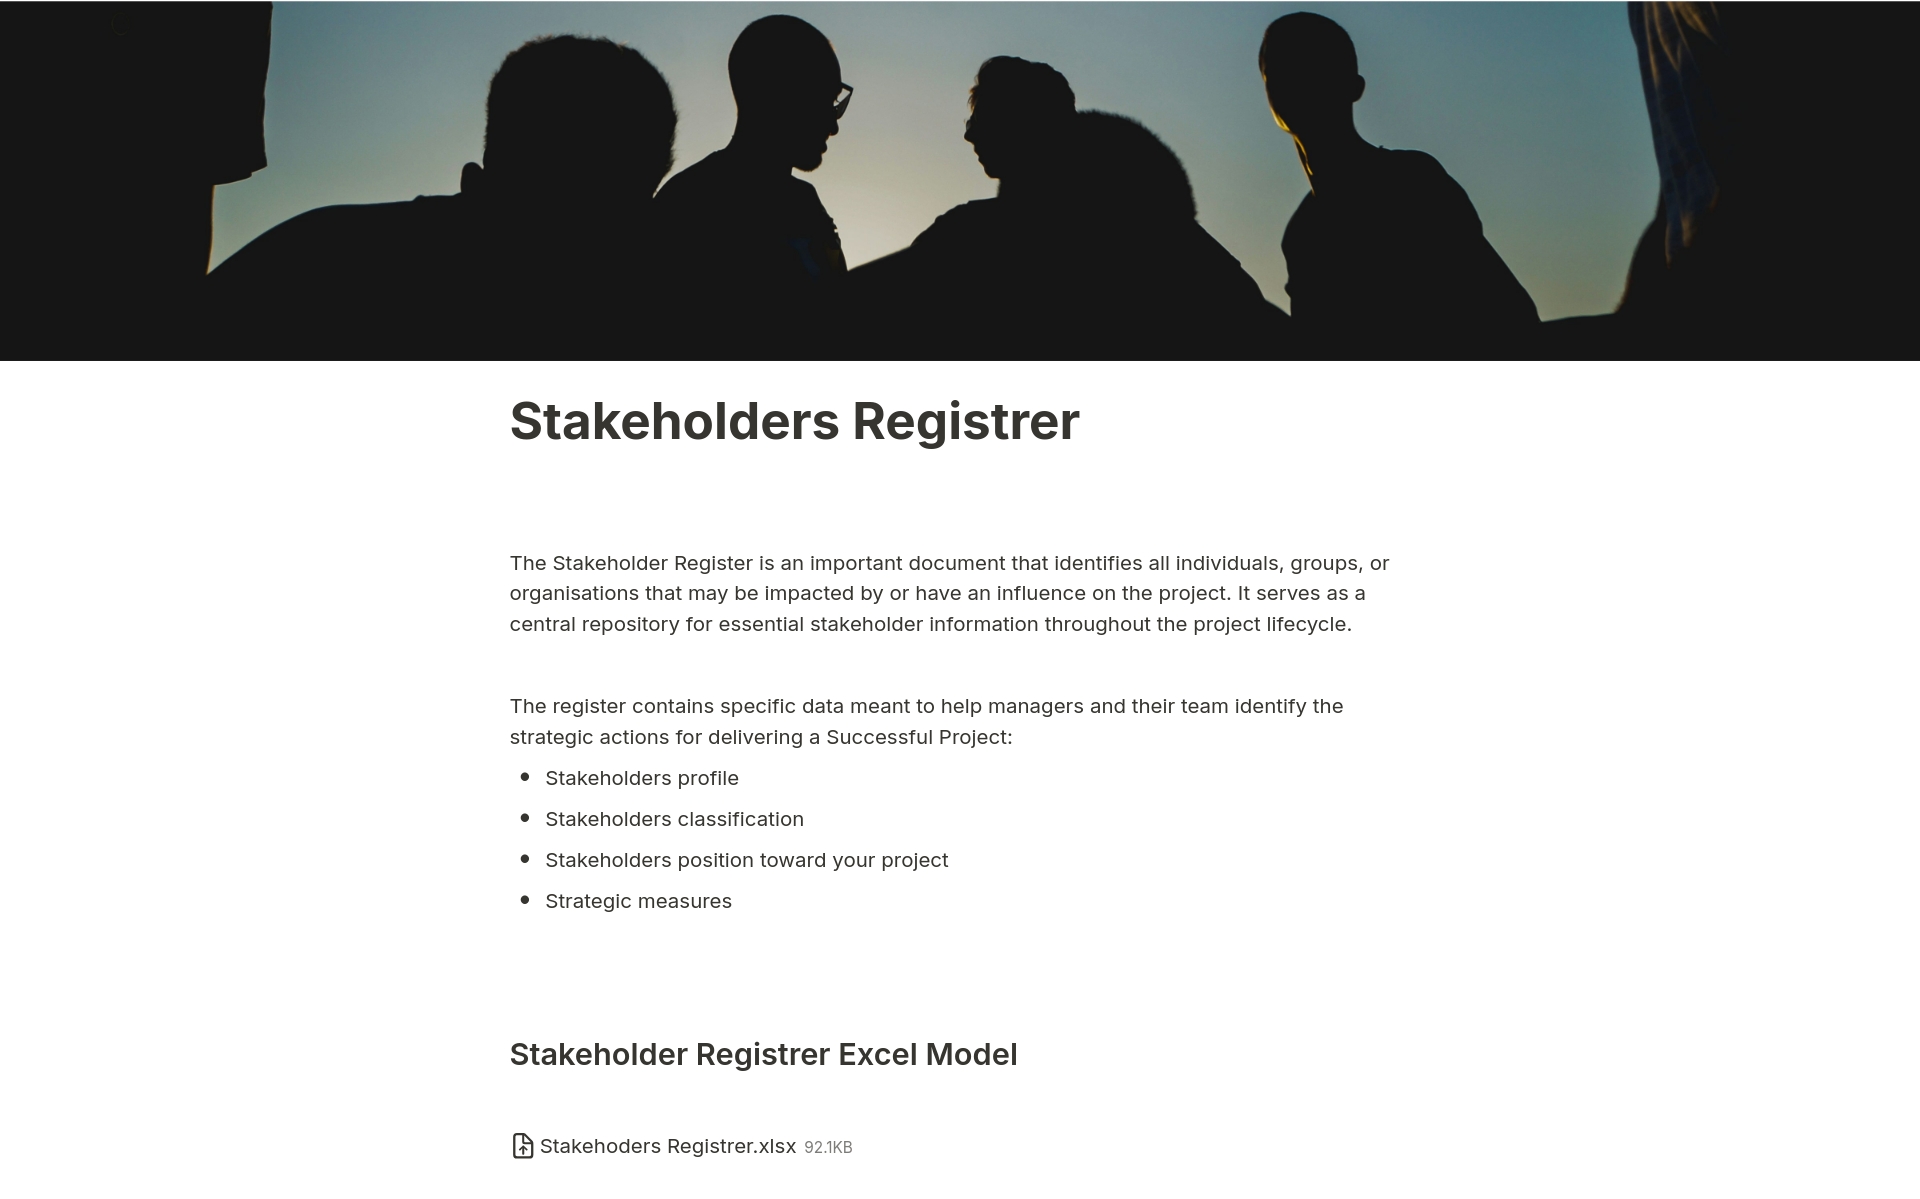 Vista previa de una plantilla para Stakeholders Registrer